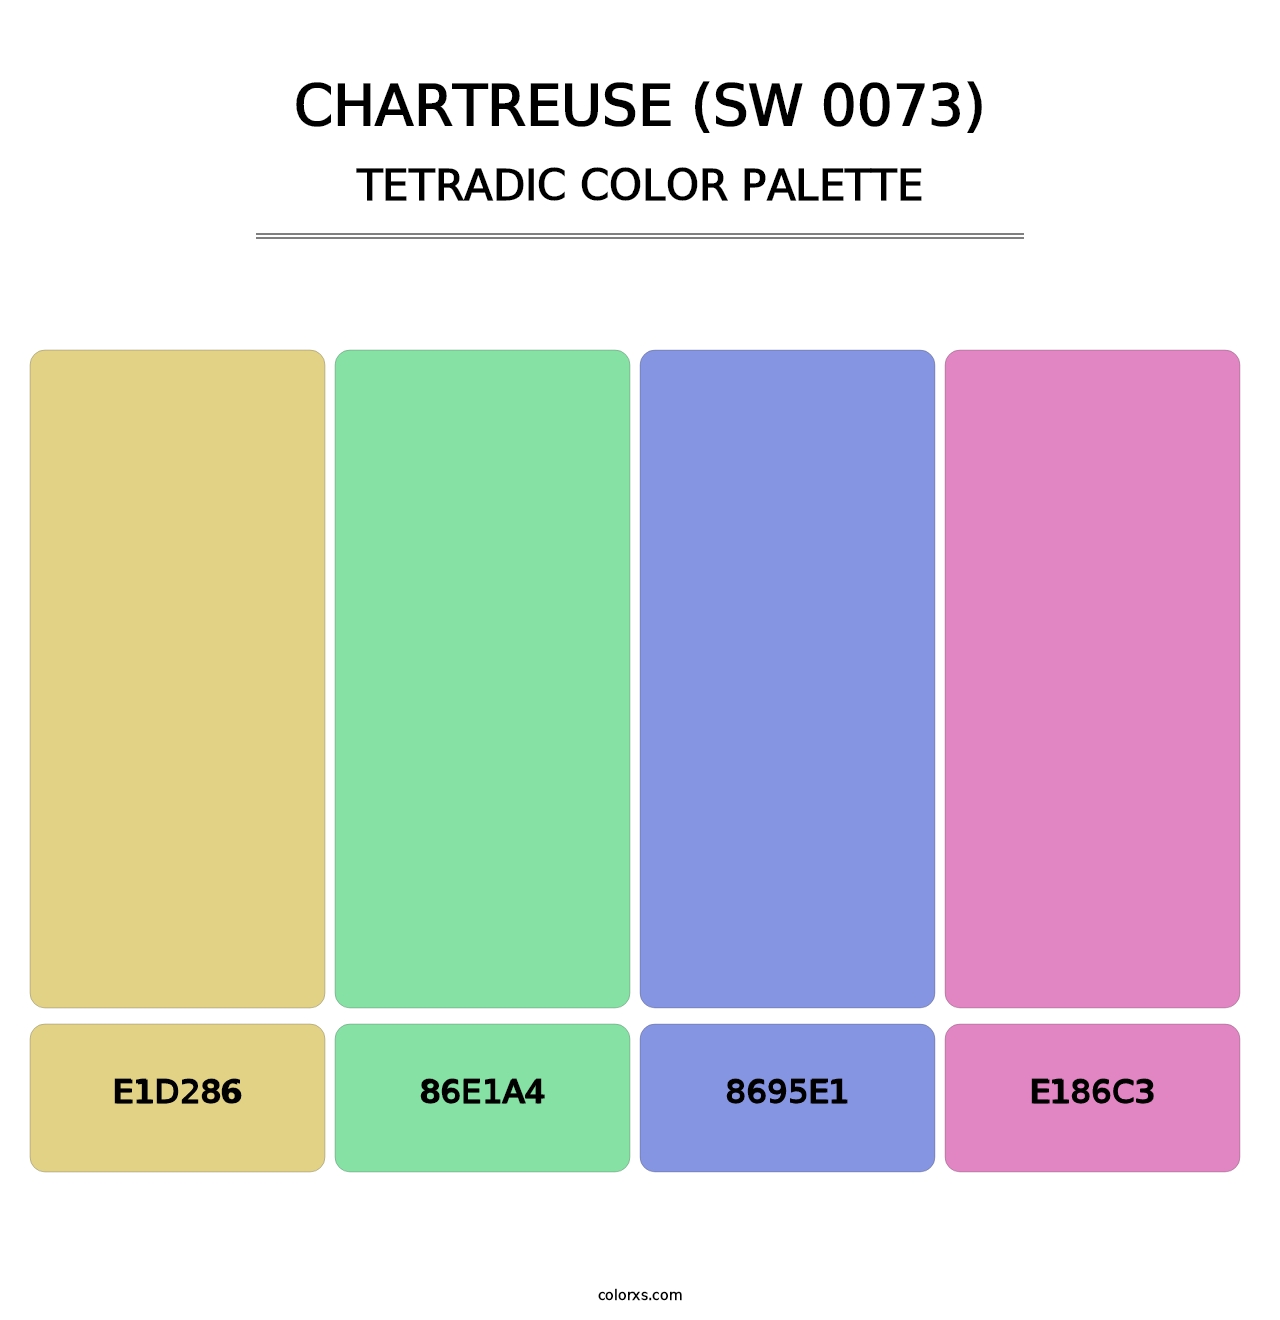 Chartreuse (SW 0073) - Tetradic Color Palette